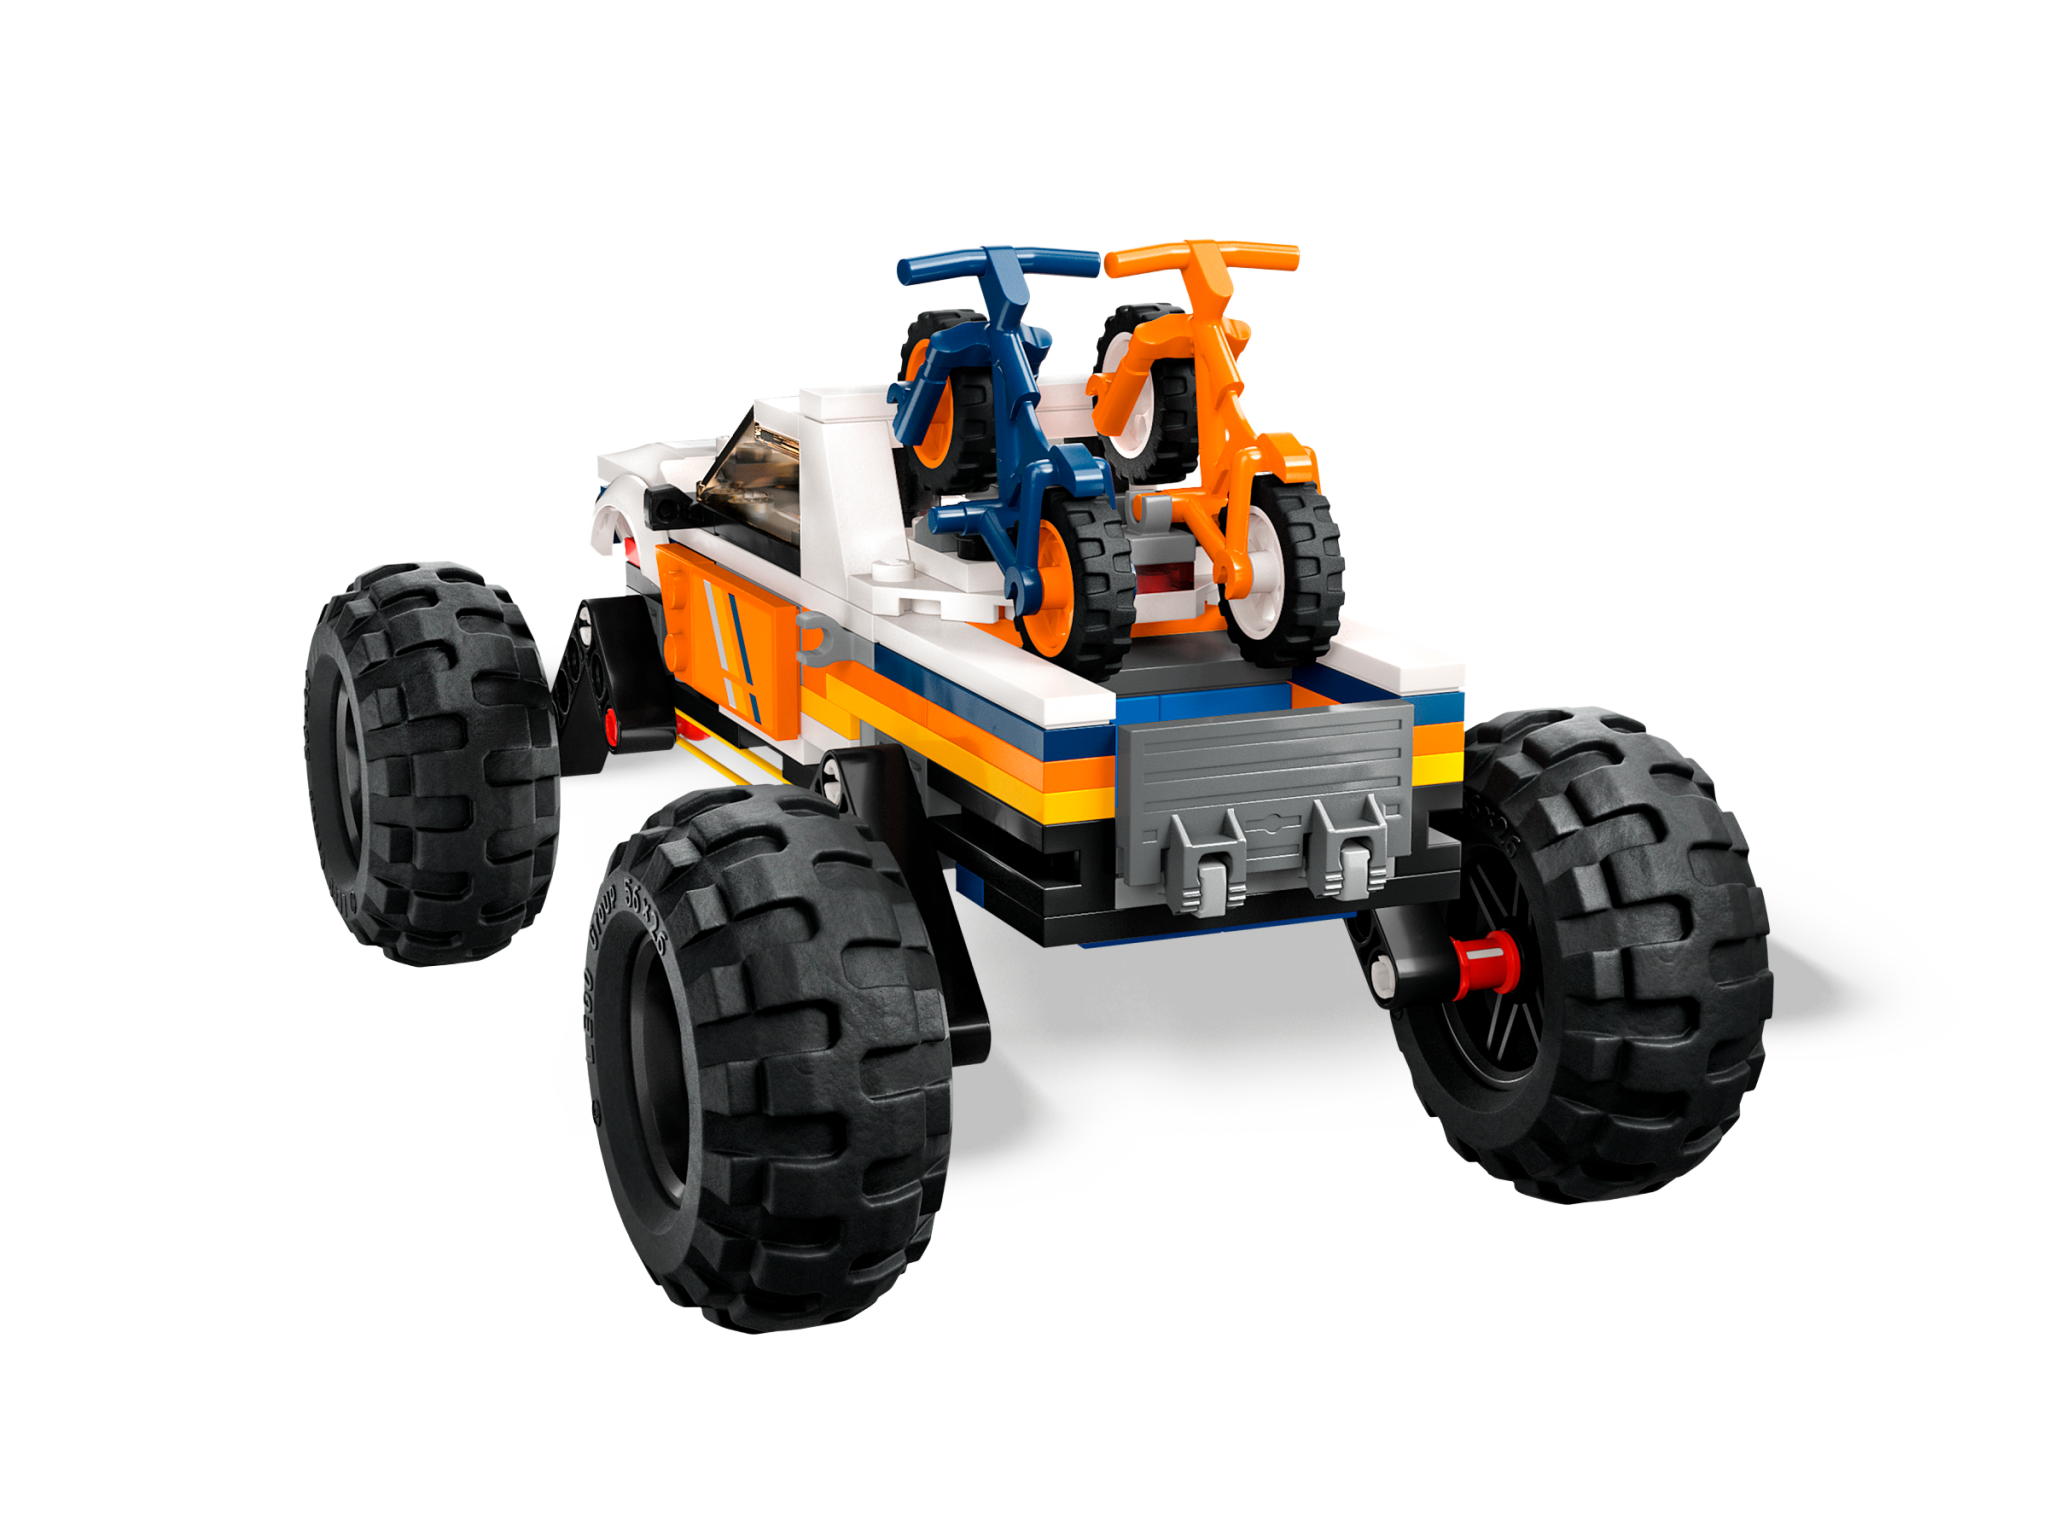 Lego Lego 60387 City - Les aventures en 4X4 tout-terrain